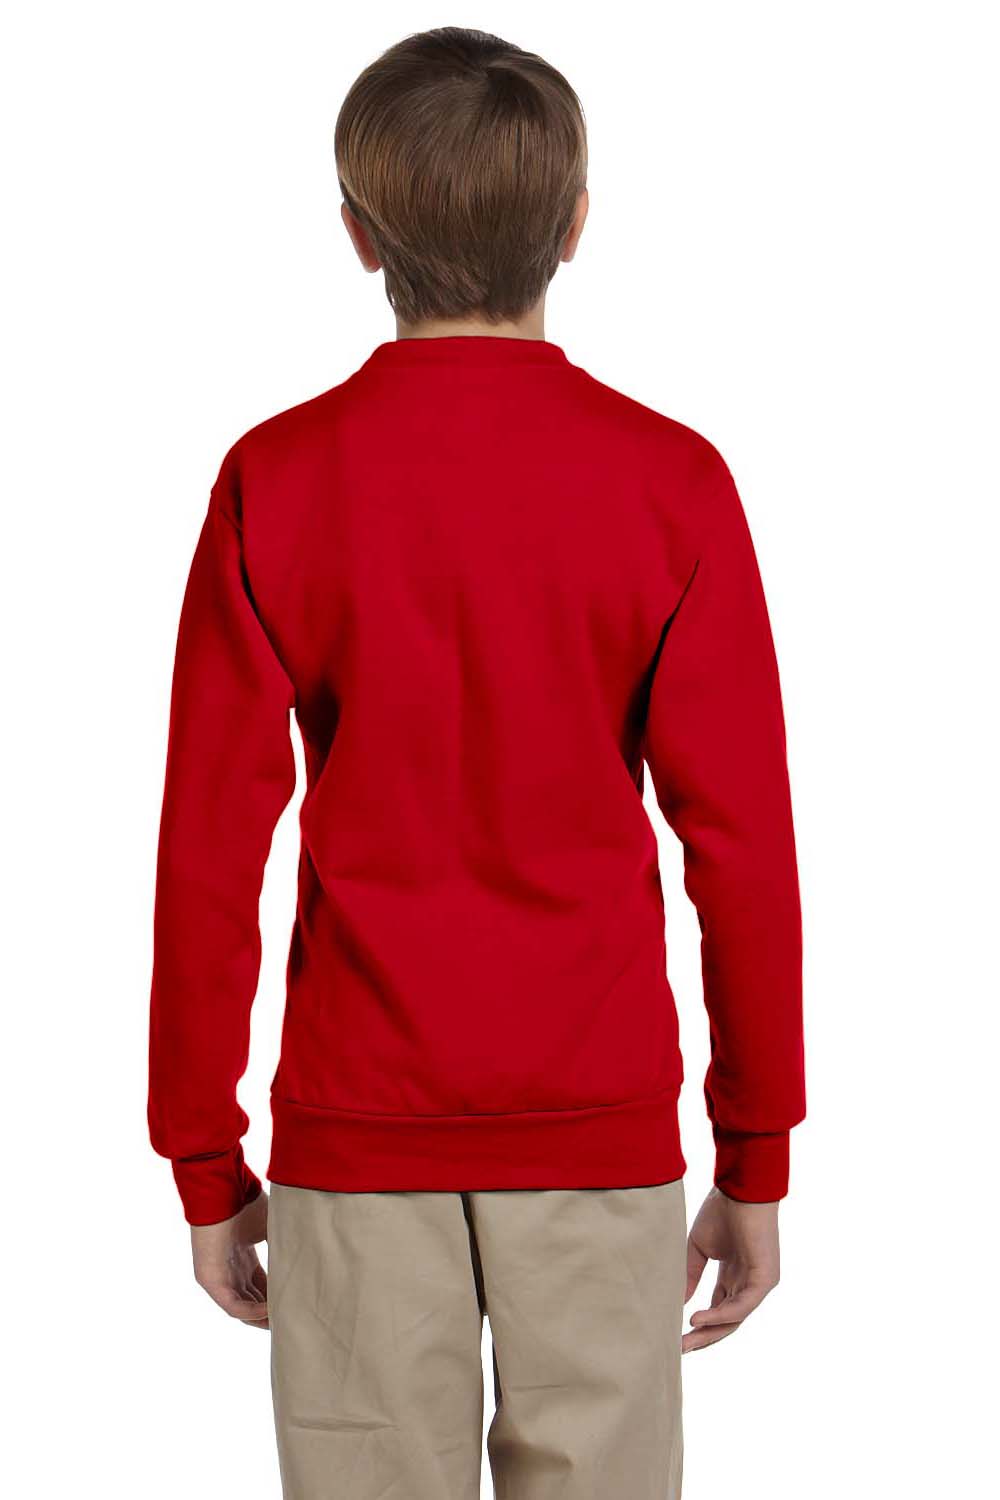 Hanes P360 Youth EcoSmart Print Pro XP Fleece Crewneck Sweatshirt Red Back